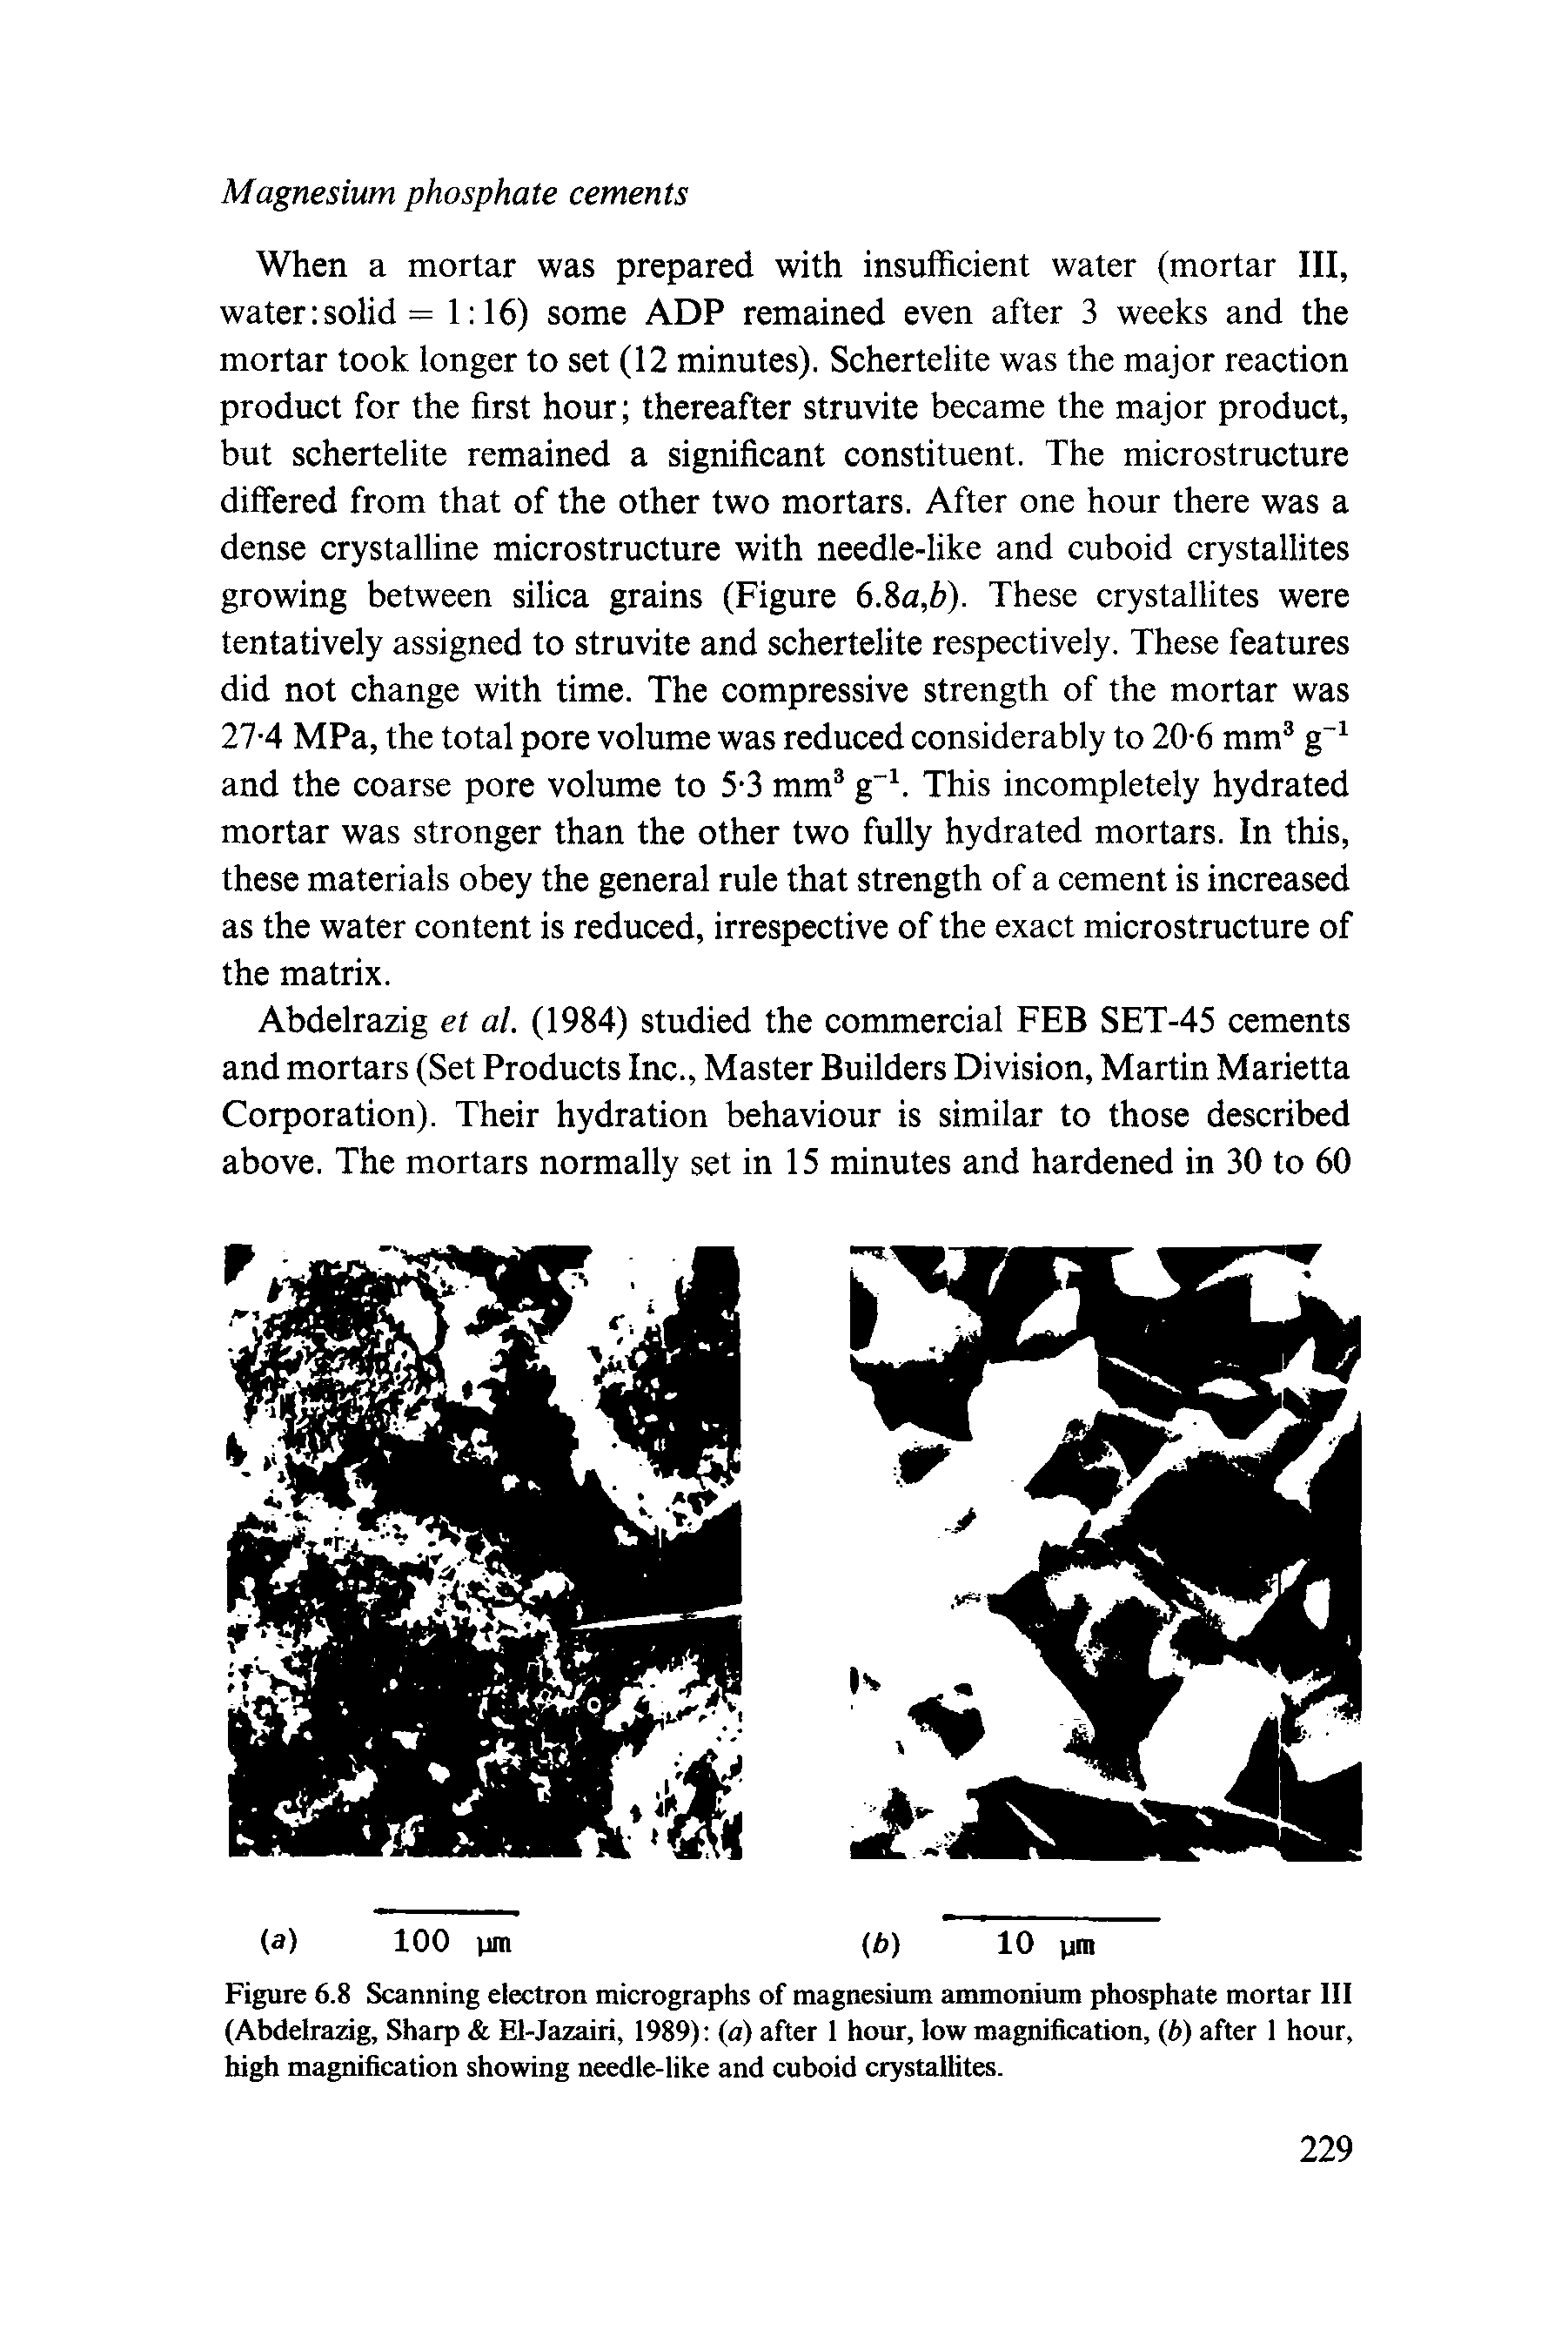 Figure 6.8 Scanning electron micrographs of magnesium ammonium phosphate mortar III (Abdelrazig, Sharp El-Jazairi, 1989) (a) after 1 hour, low magnification, (b) after 1 hour, high magnification showing needle-like and cuboid crystallites.